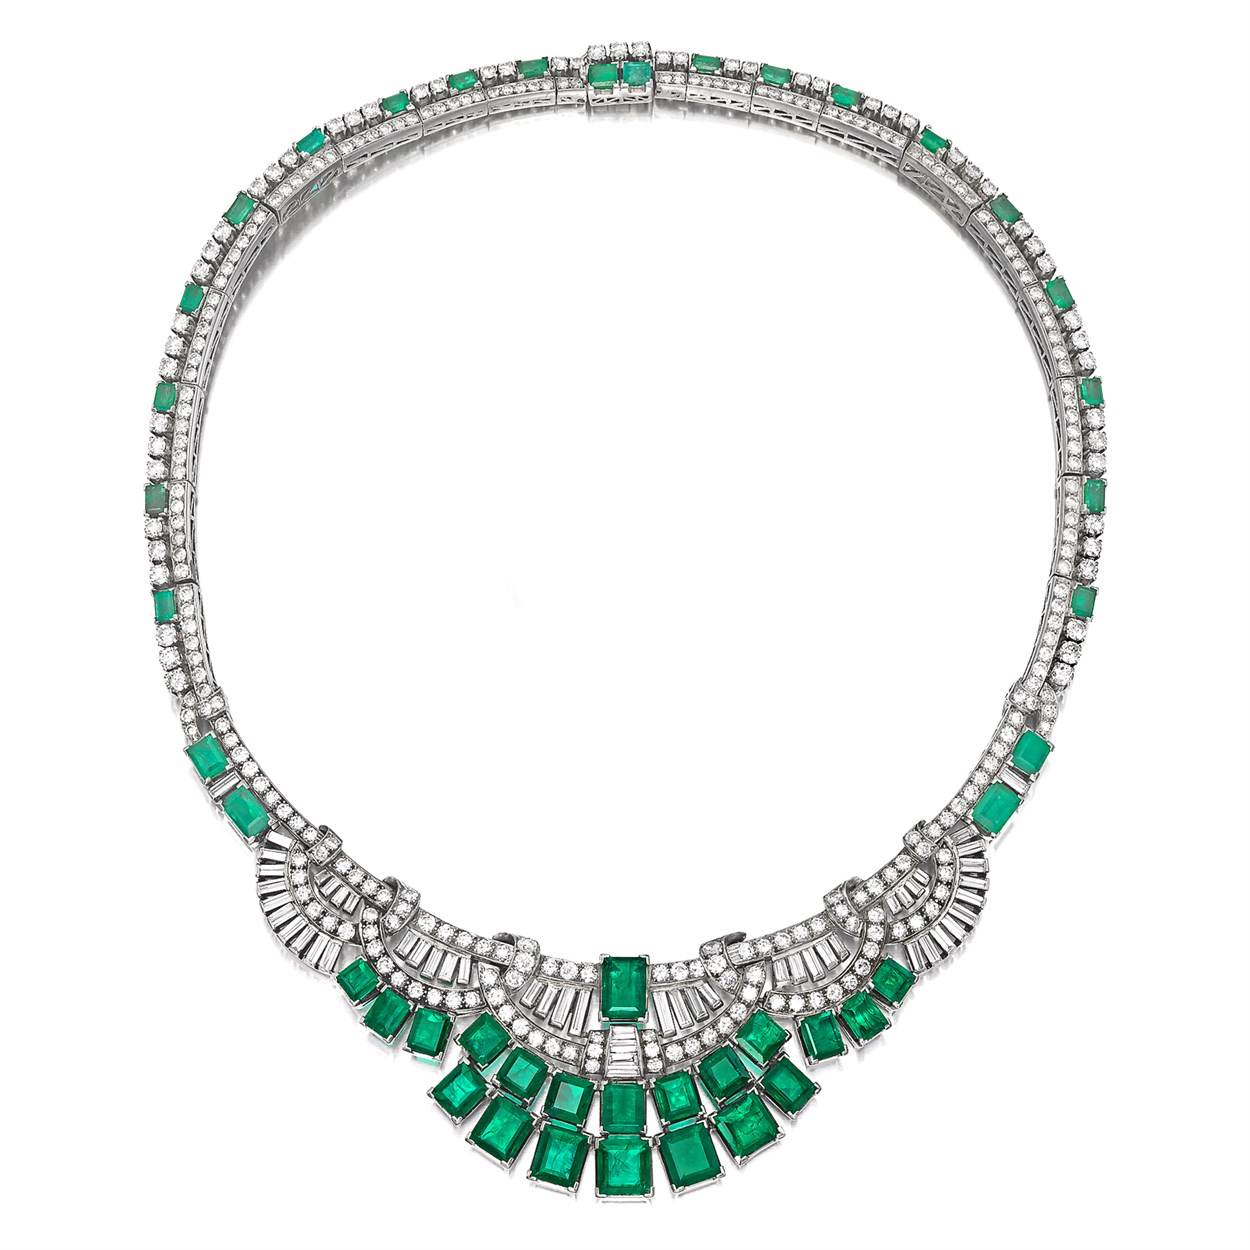 Lot 118 - An emerald, diamond, and platinum necklace